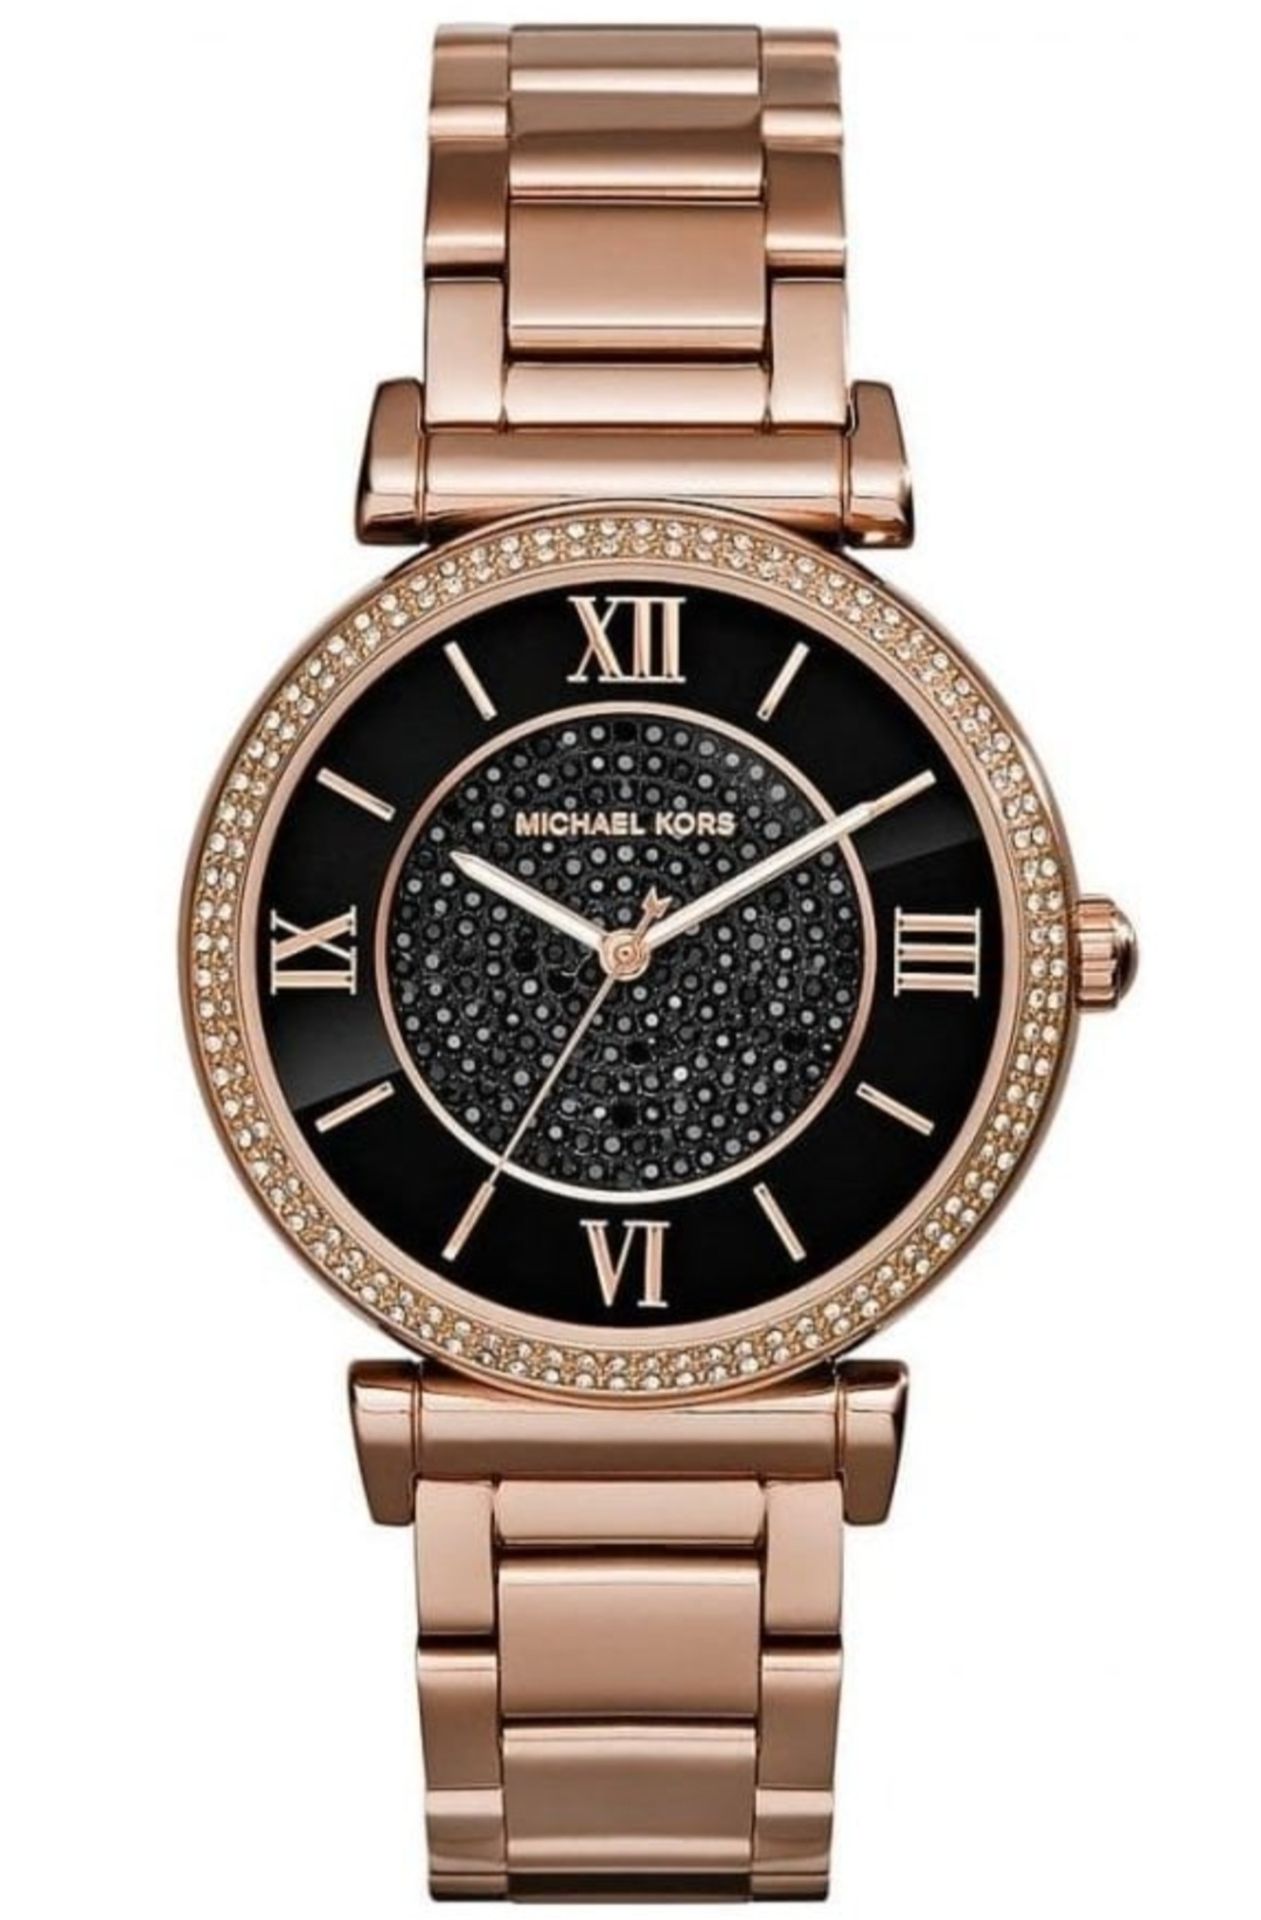 MICHAEL KORS MK3356 Ladies Catlin Rose Gold Quartz Watch